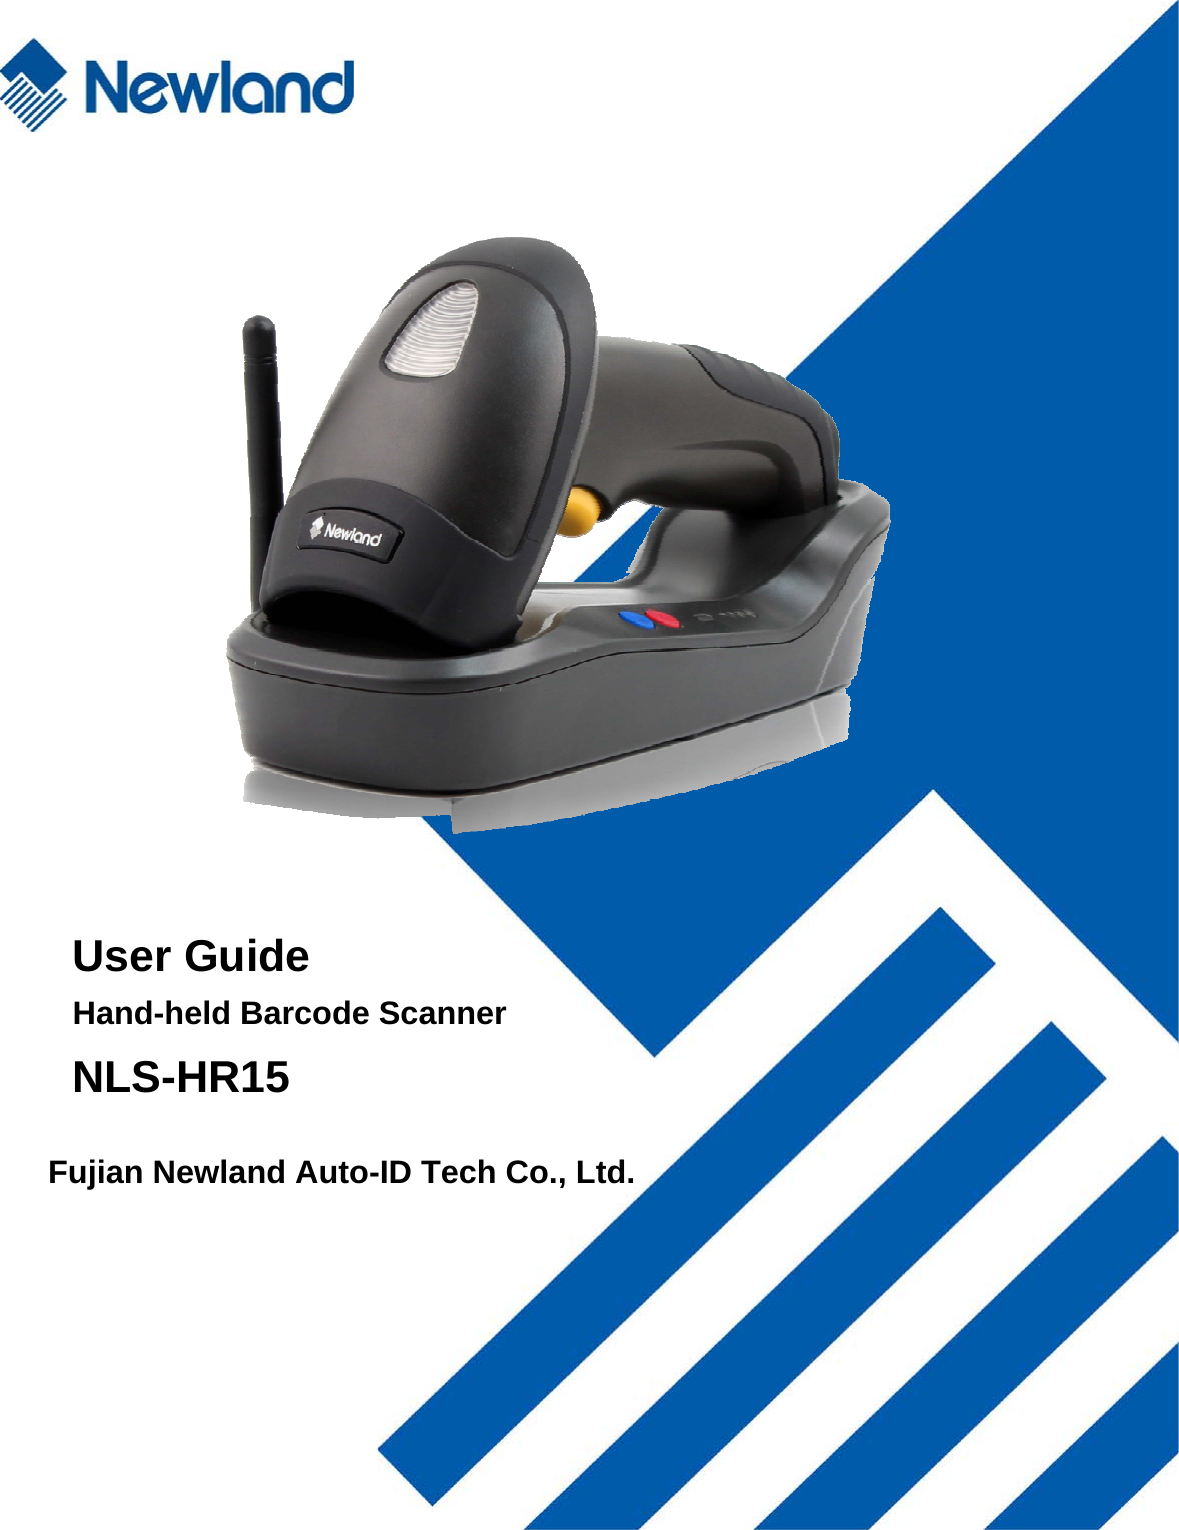                        Fujian Newland Auto-ID Tech Co., Ltd. User Guide  Hand-held Barcode Scanner  NLS-HR15  